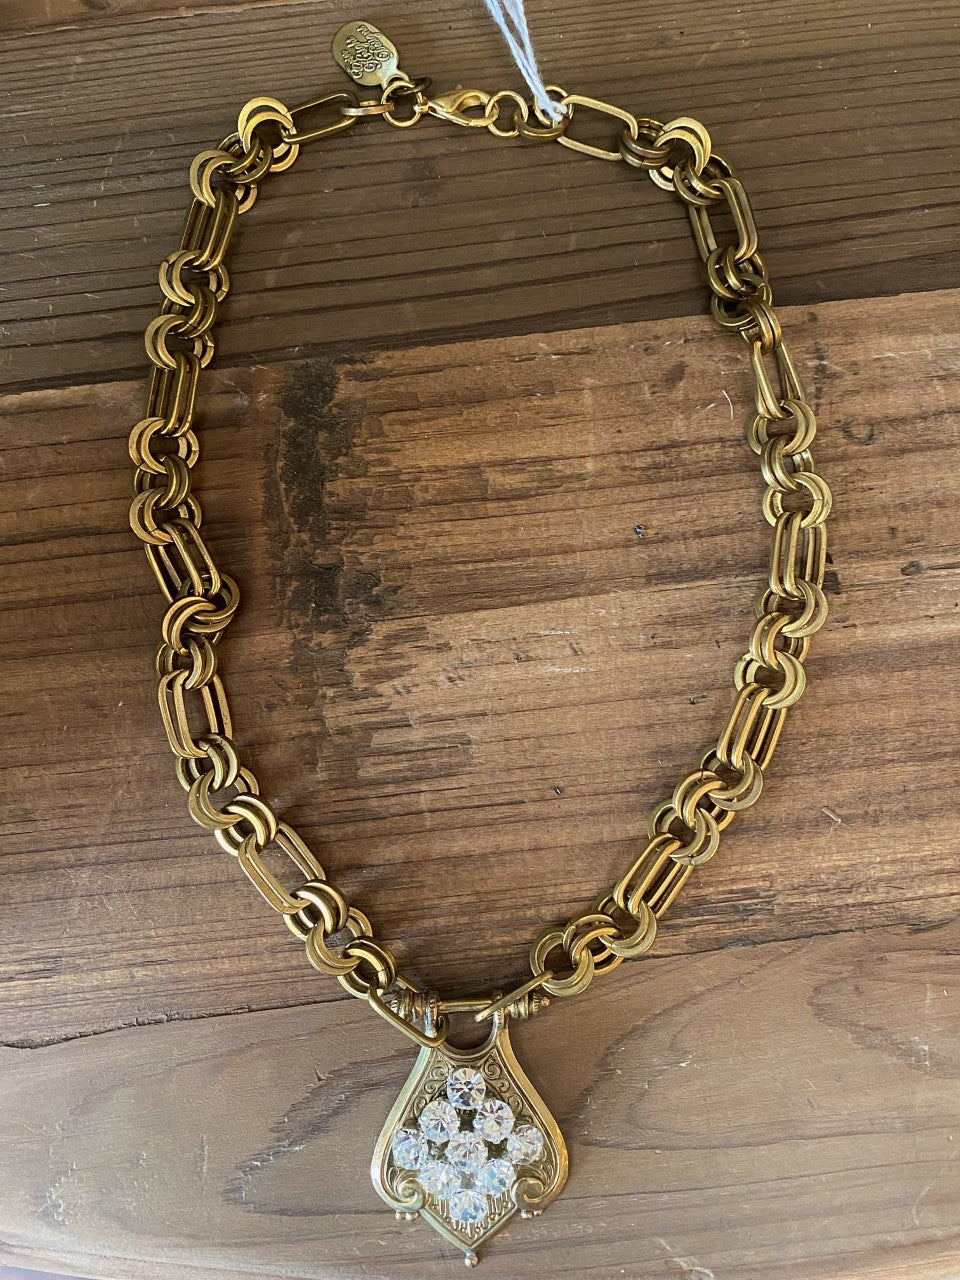 Vintage Chain Necklace with Vintage Czech Button